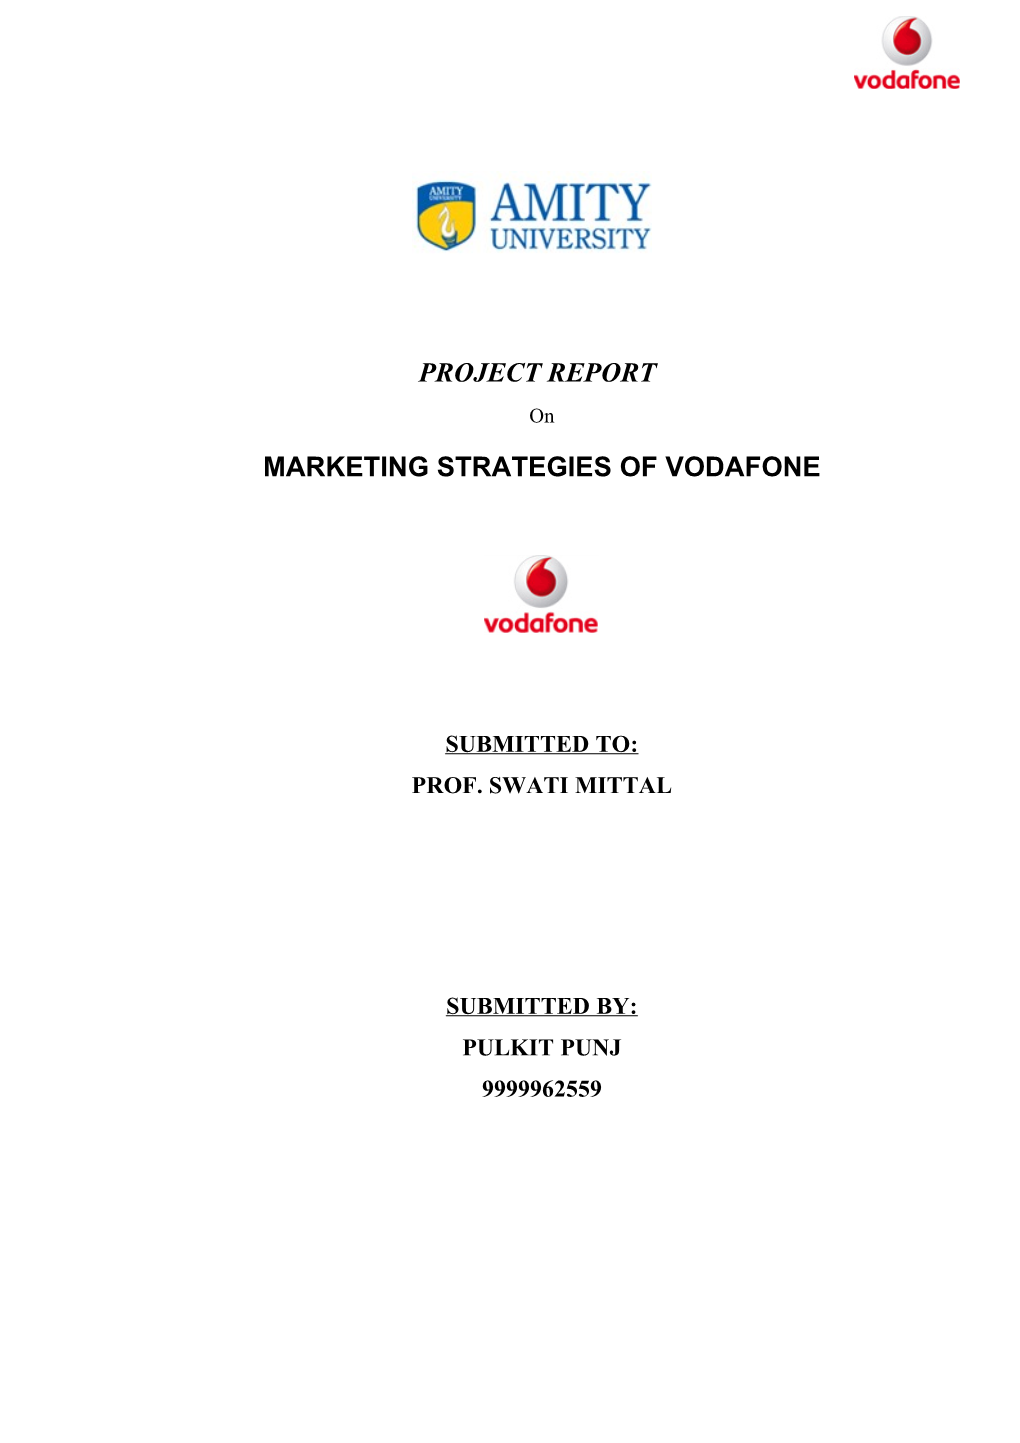 Project Report Marketing Strategies of Vodafone